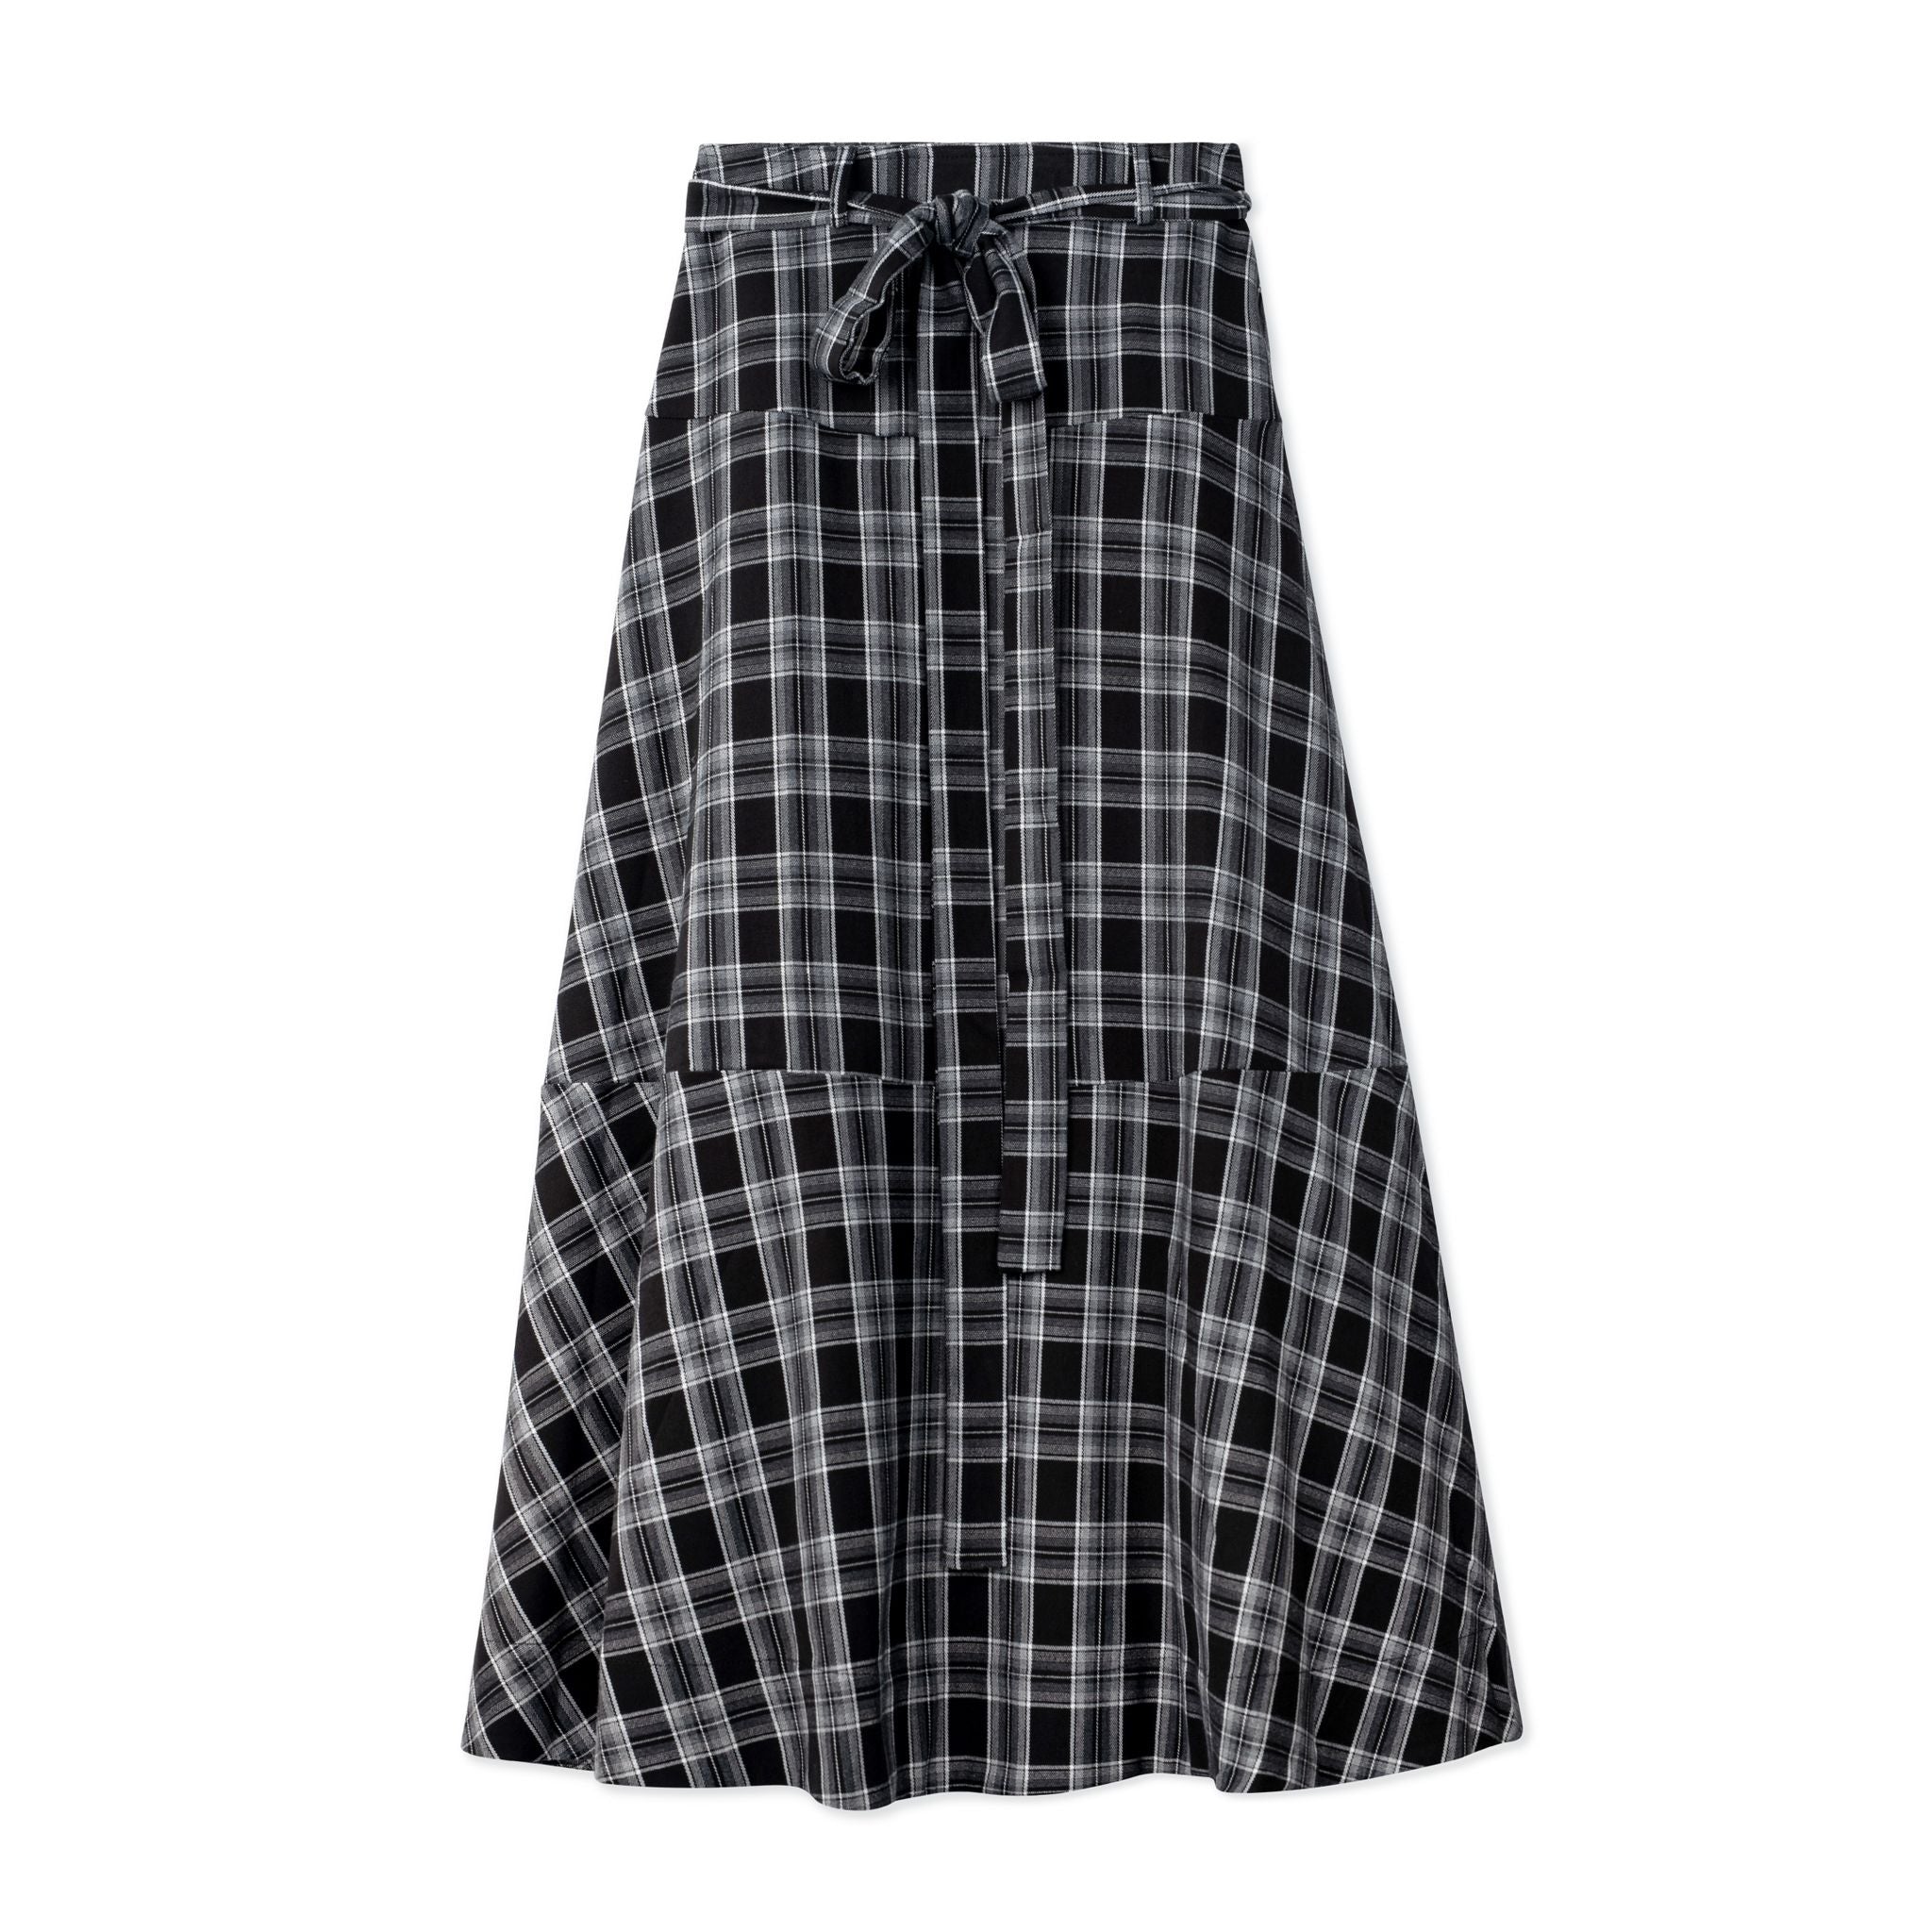 Mazzy Black Plaid Skirt - Grit N Glory